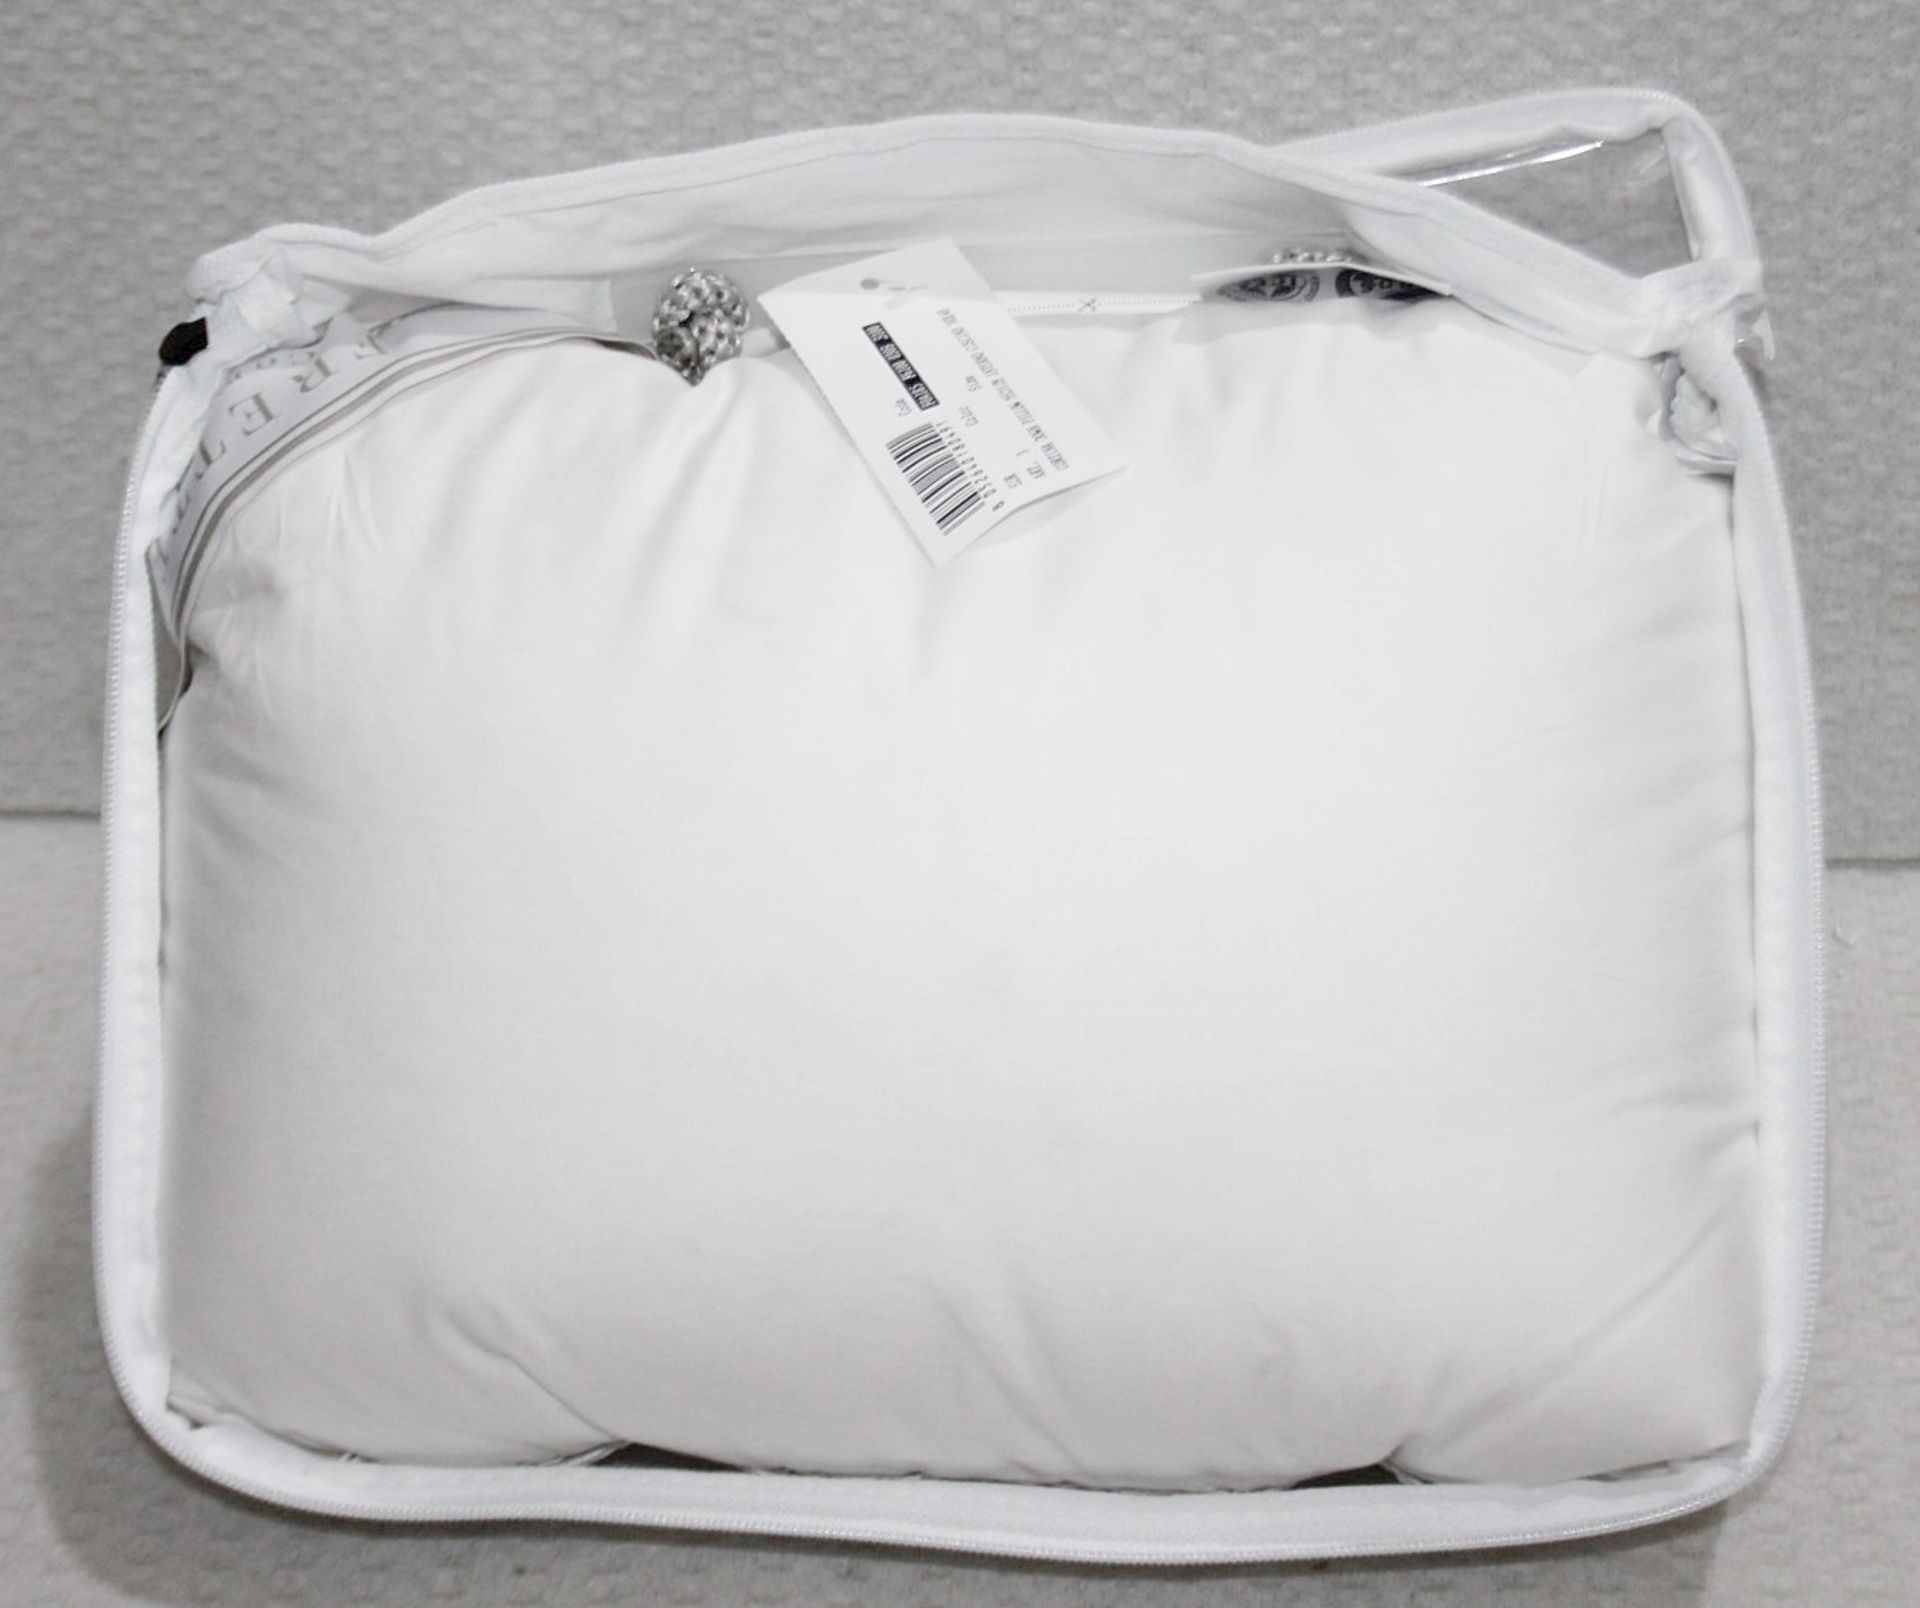 1 x FRETTE 'Cortina' Medium Down Boudoir Pillow (30cm x 40cm) - Original Price £170.00 - Image 2 of 10